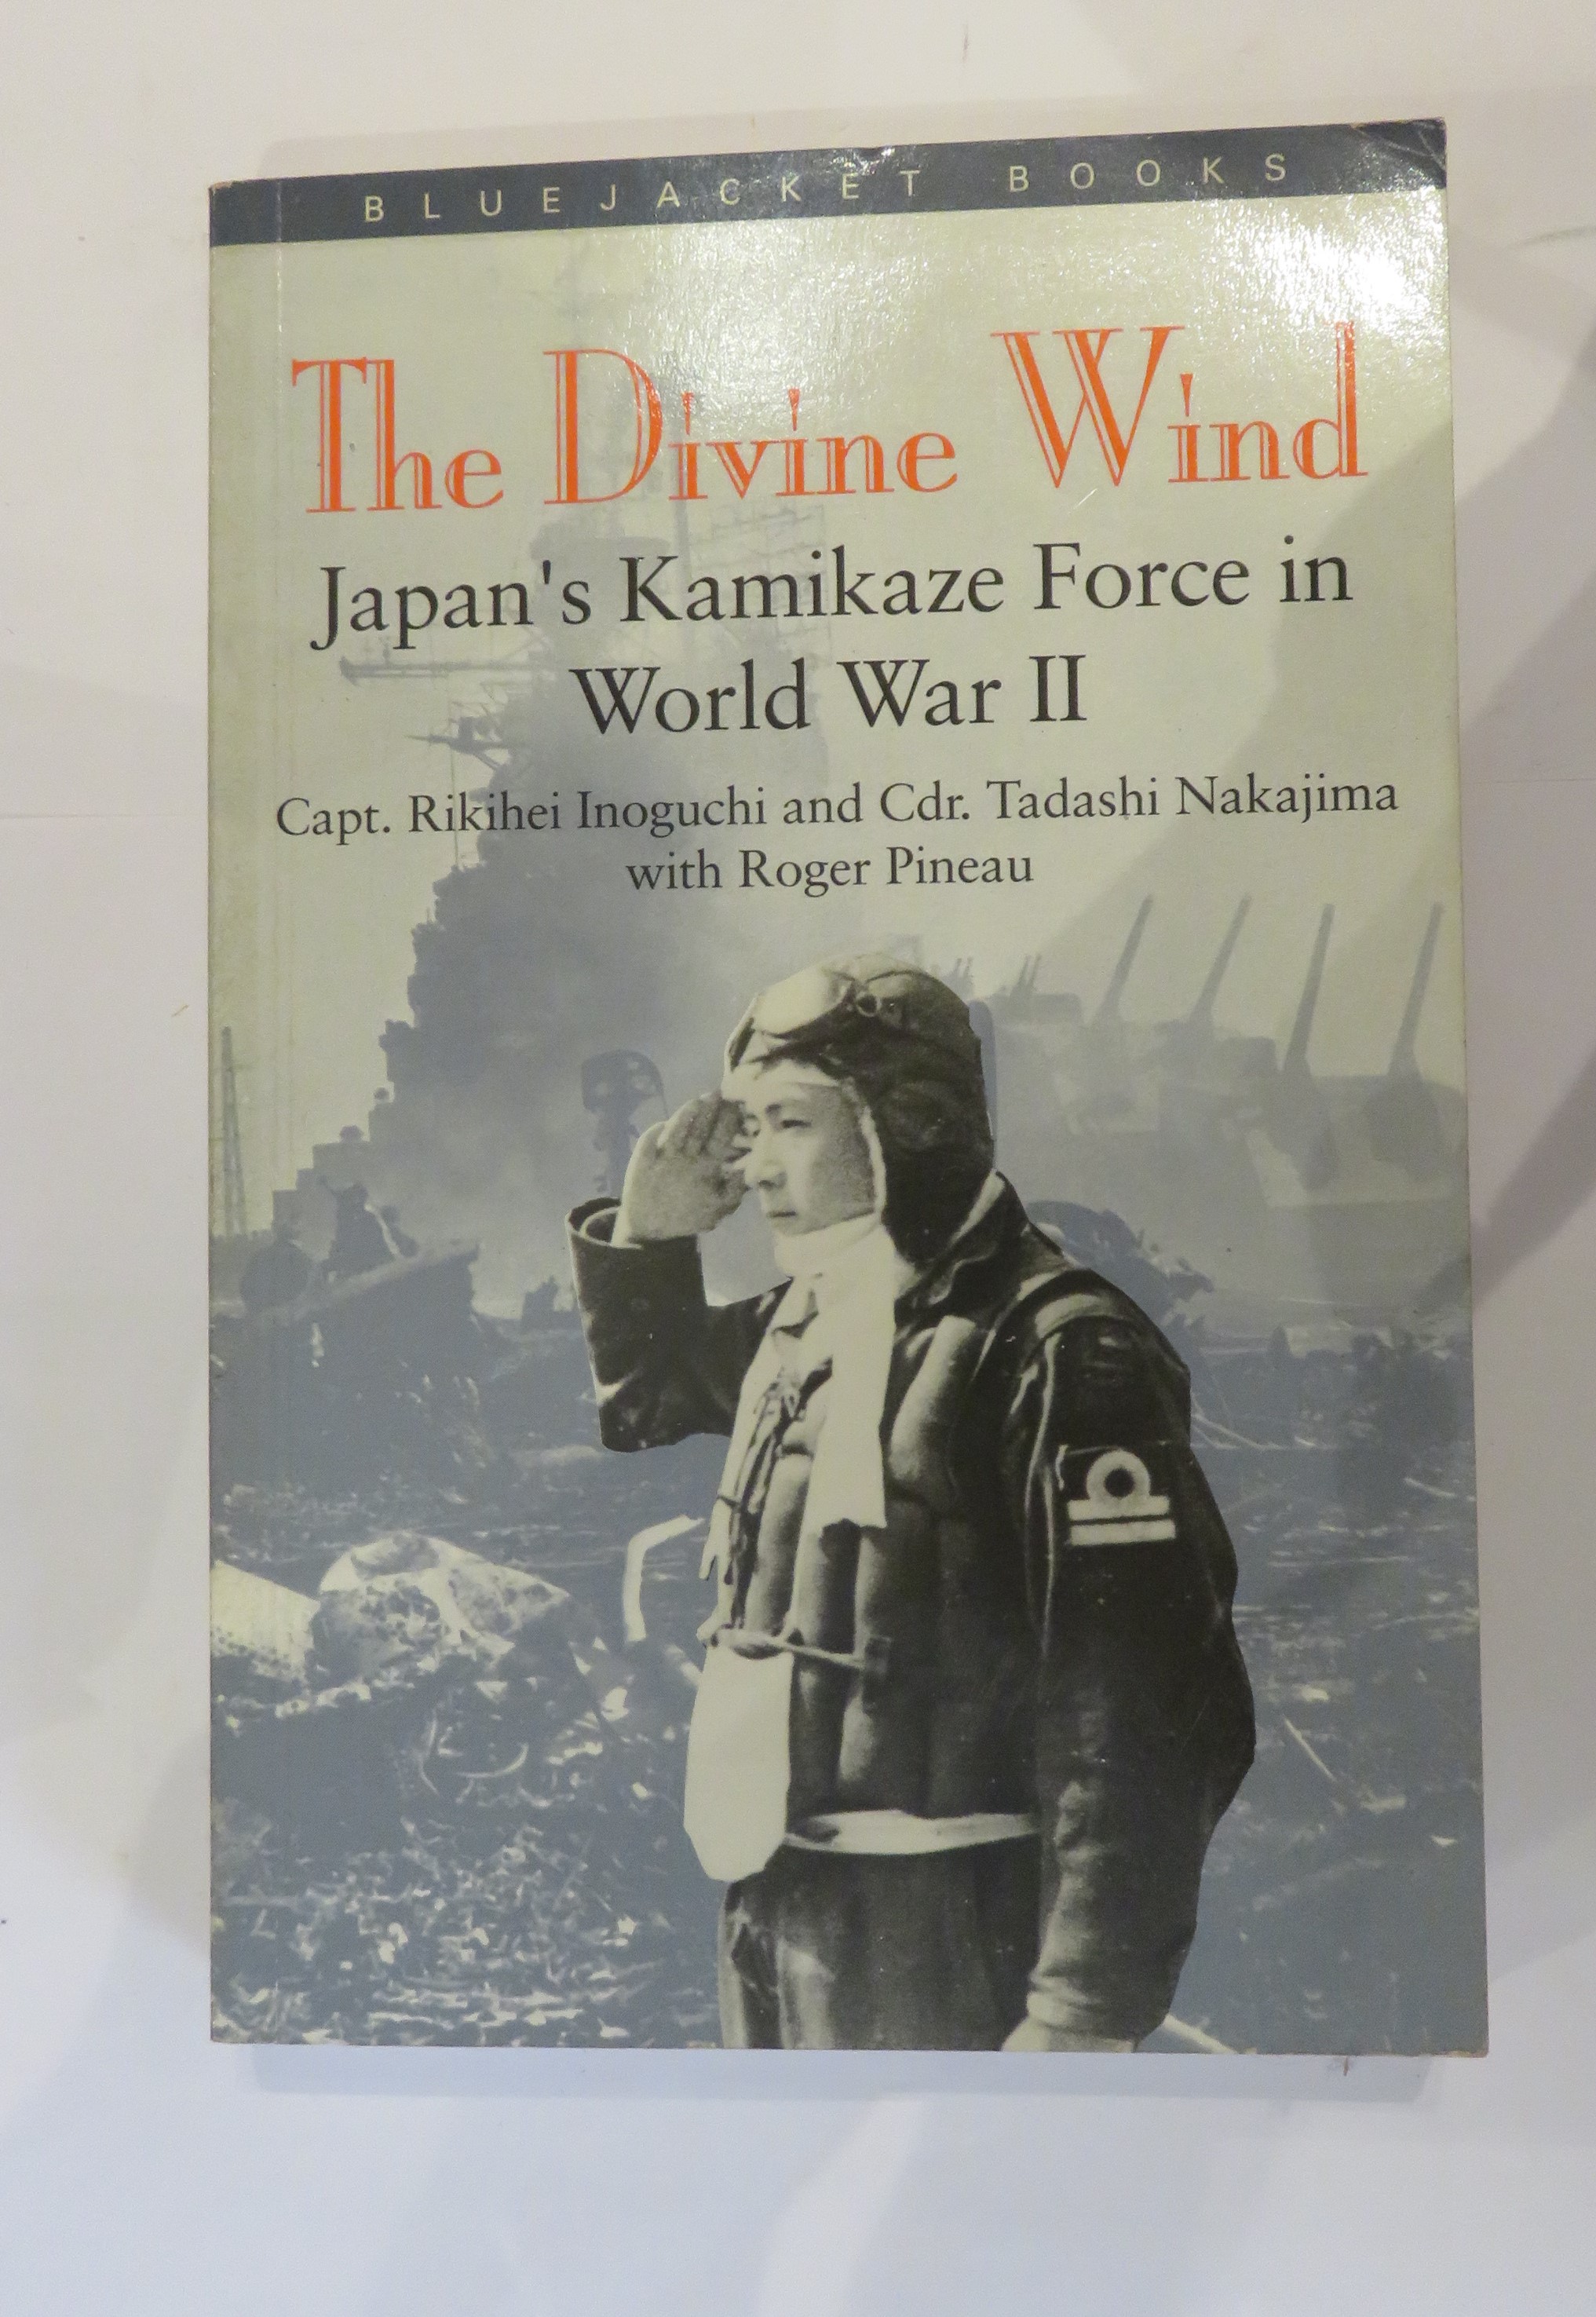 The Divine Wind: Japan's Kamikaze Force in World War II